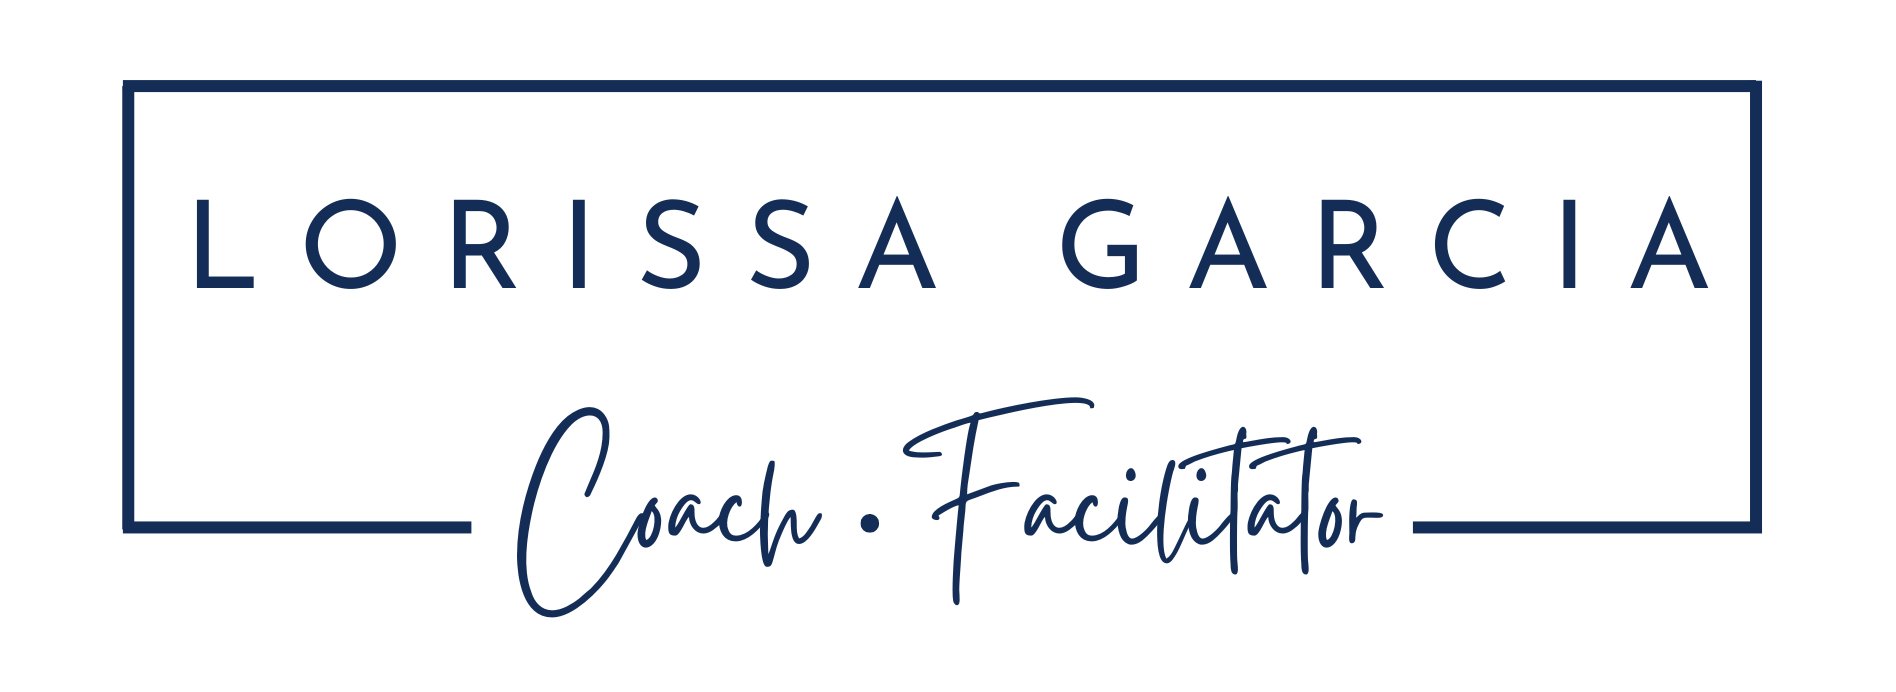 Lorissa Garcia Logo